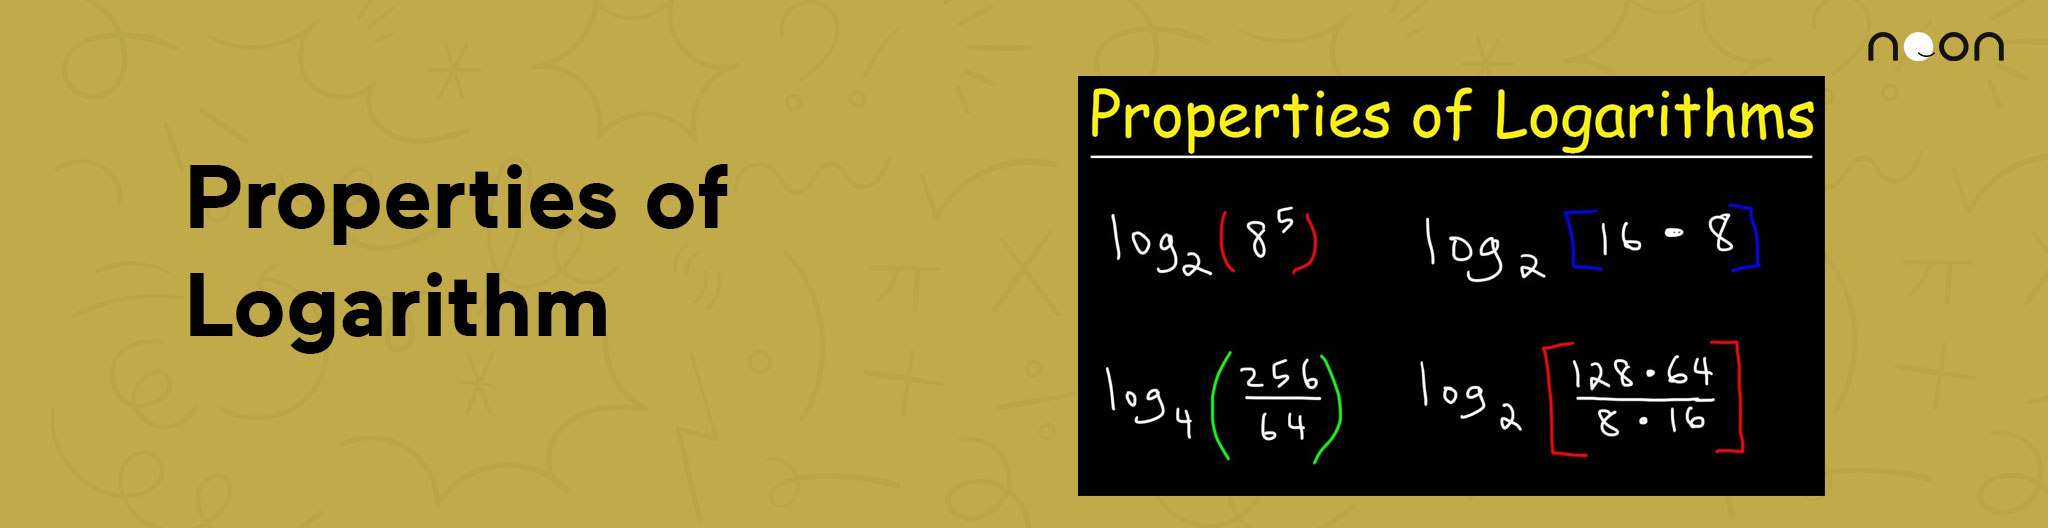 Properties of Logarithm